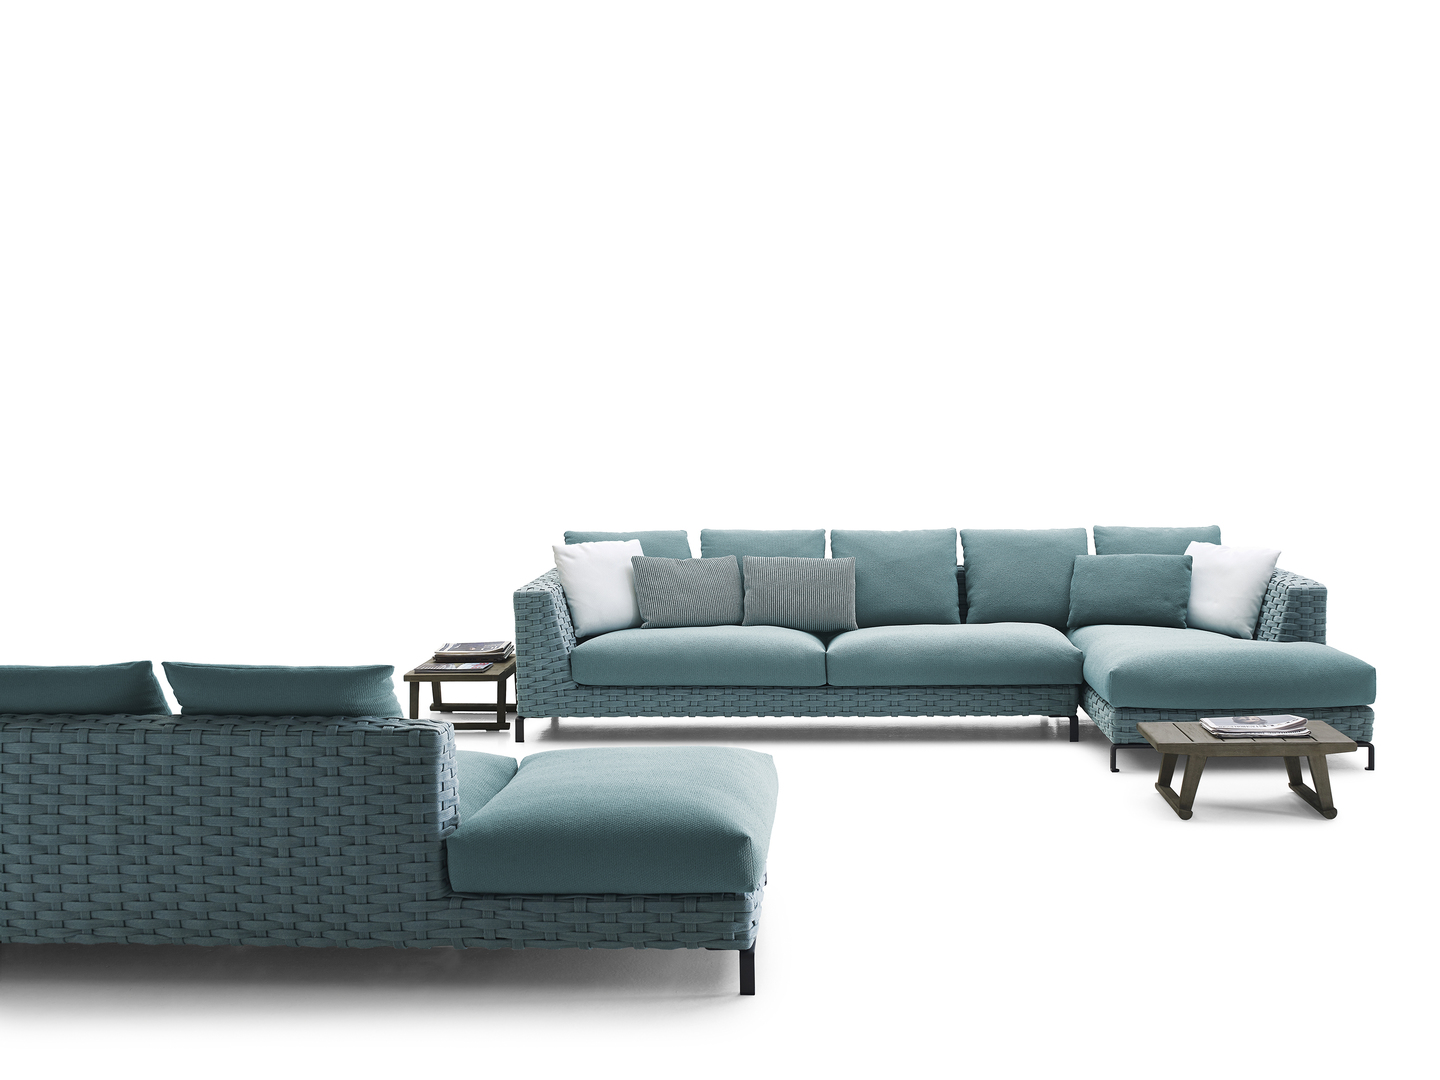 ray-outdoor-fabric-sofa-with-chaise-longue-b-b-italia-outdoor-a-brand-of-b-b-italia-spa-282566-rel5c91fb24.jpg